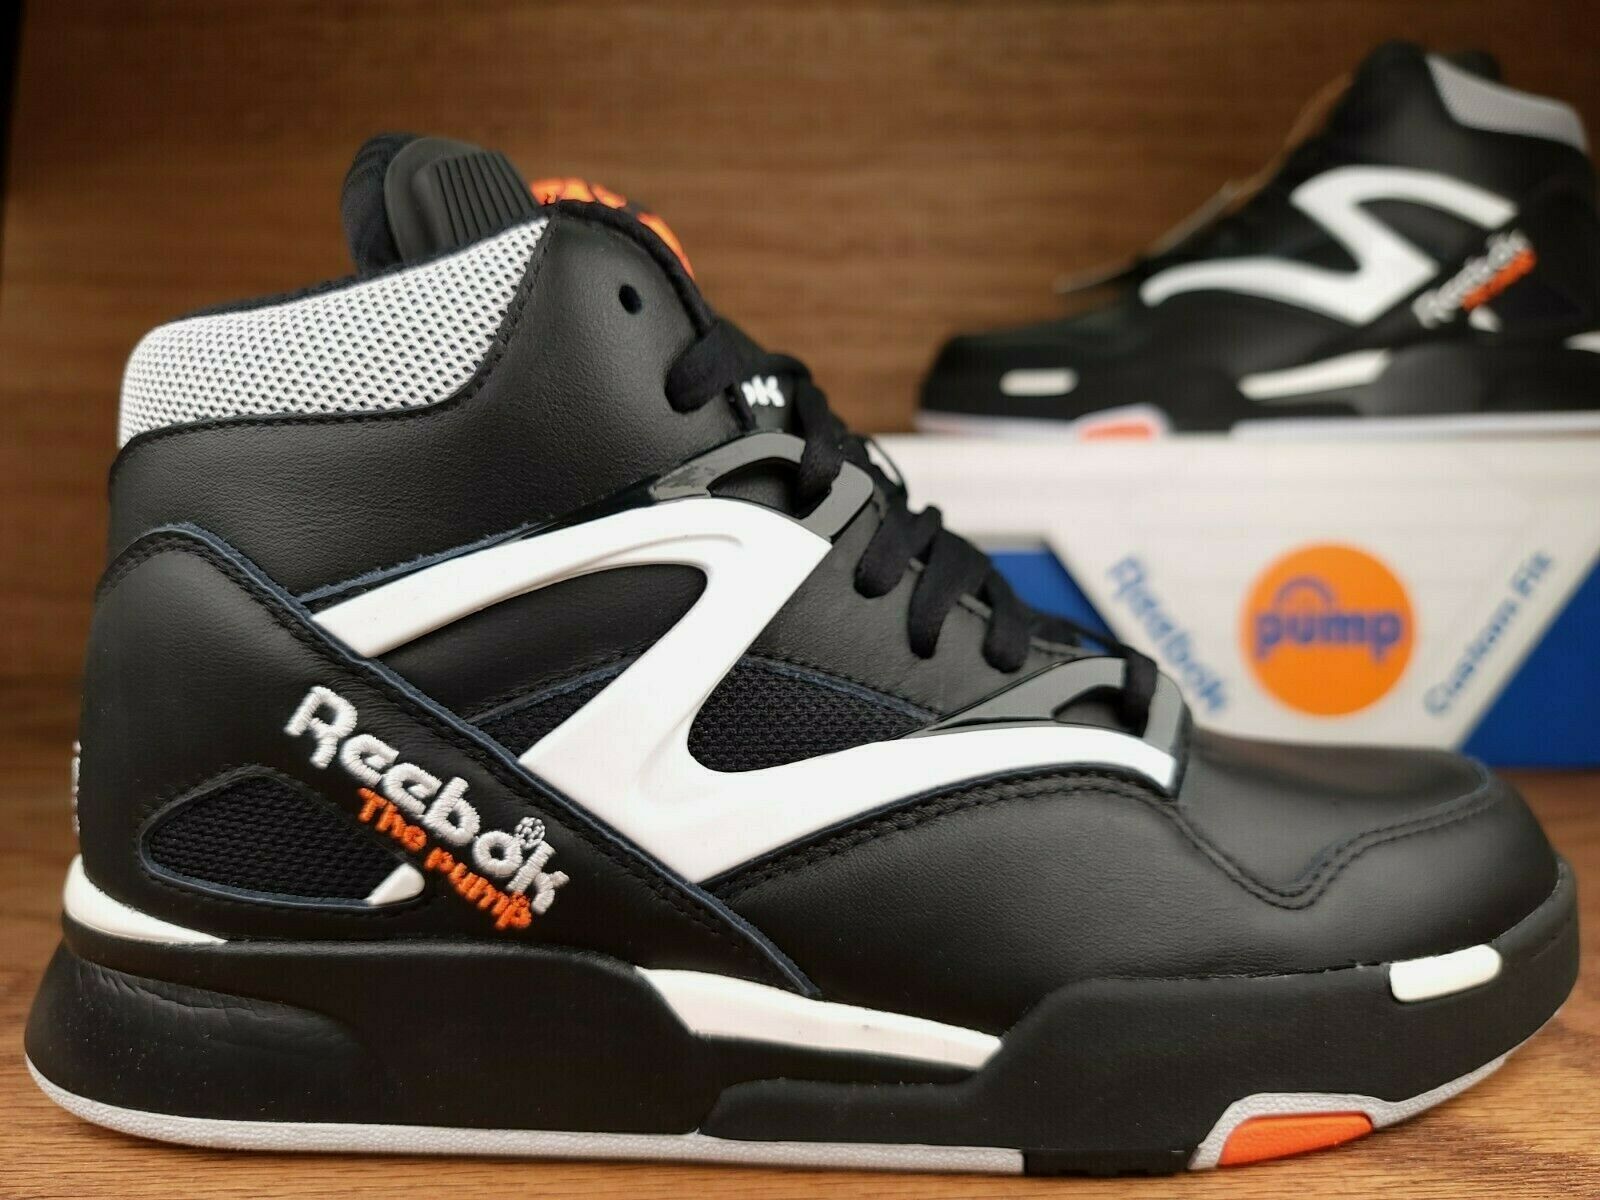 Reebok Pump Omni Zone II Dee Brown 2021 Basketball Shoes Mens Size 8.5 Black